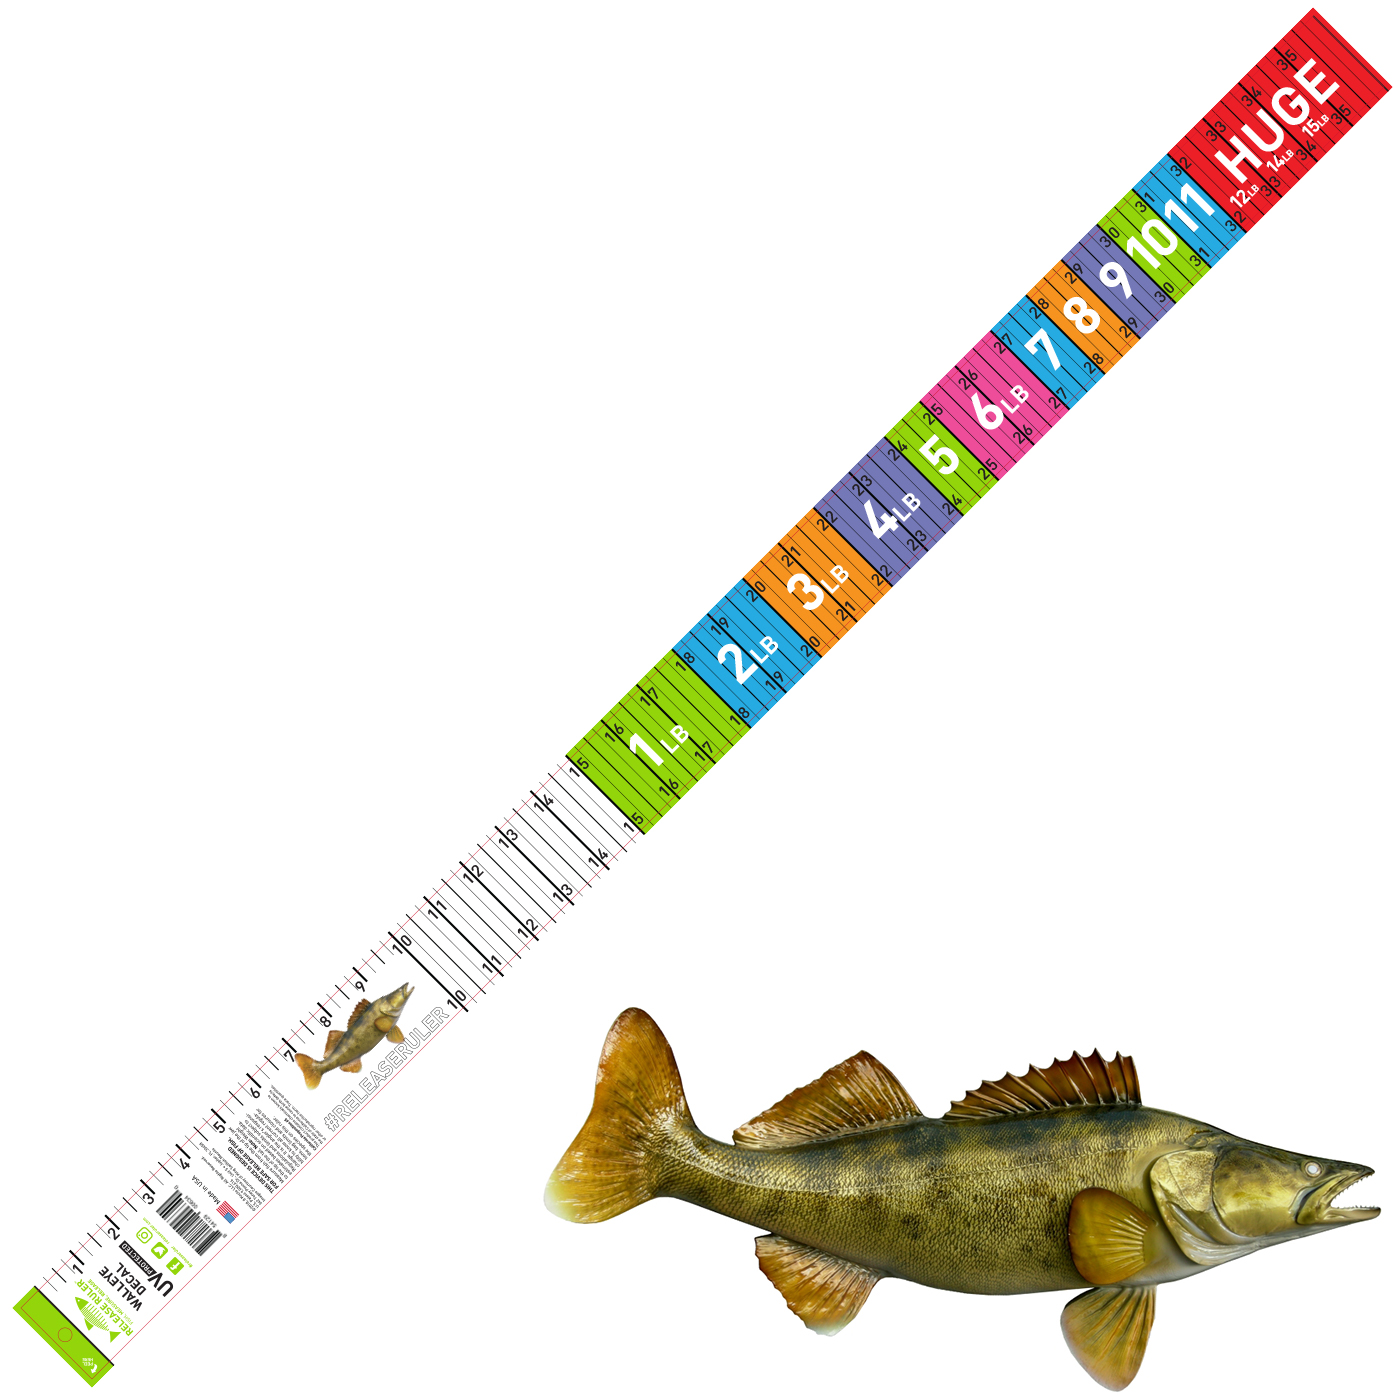 FISH MEASURING RULER Portable Measuring Fish Ruler Lightweight